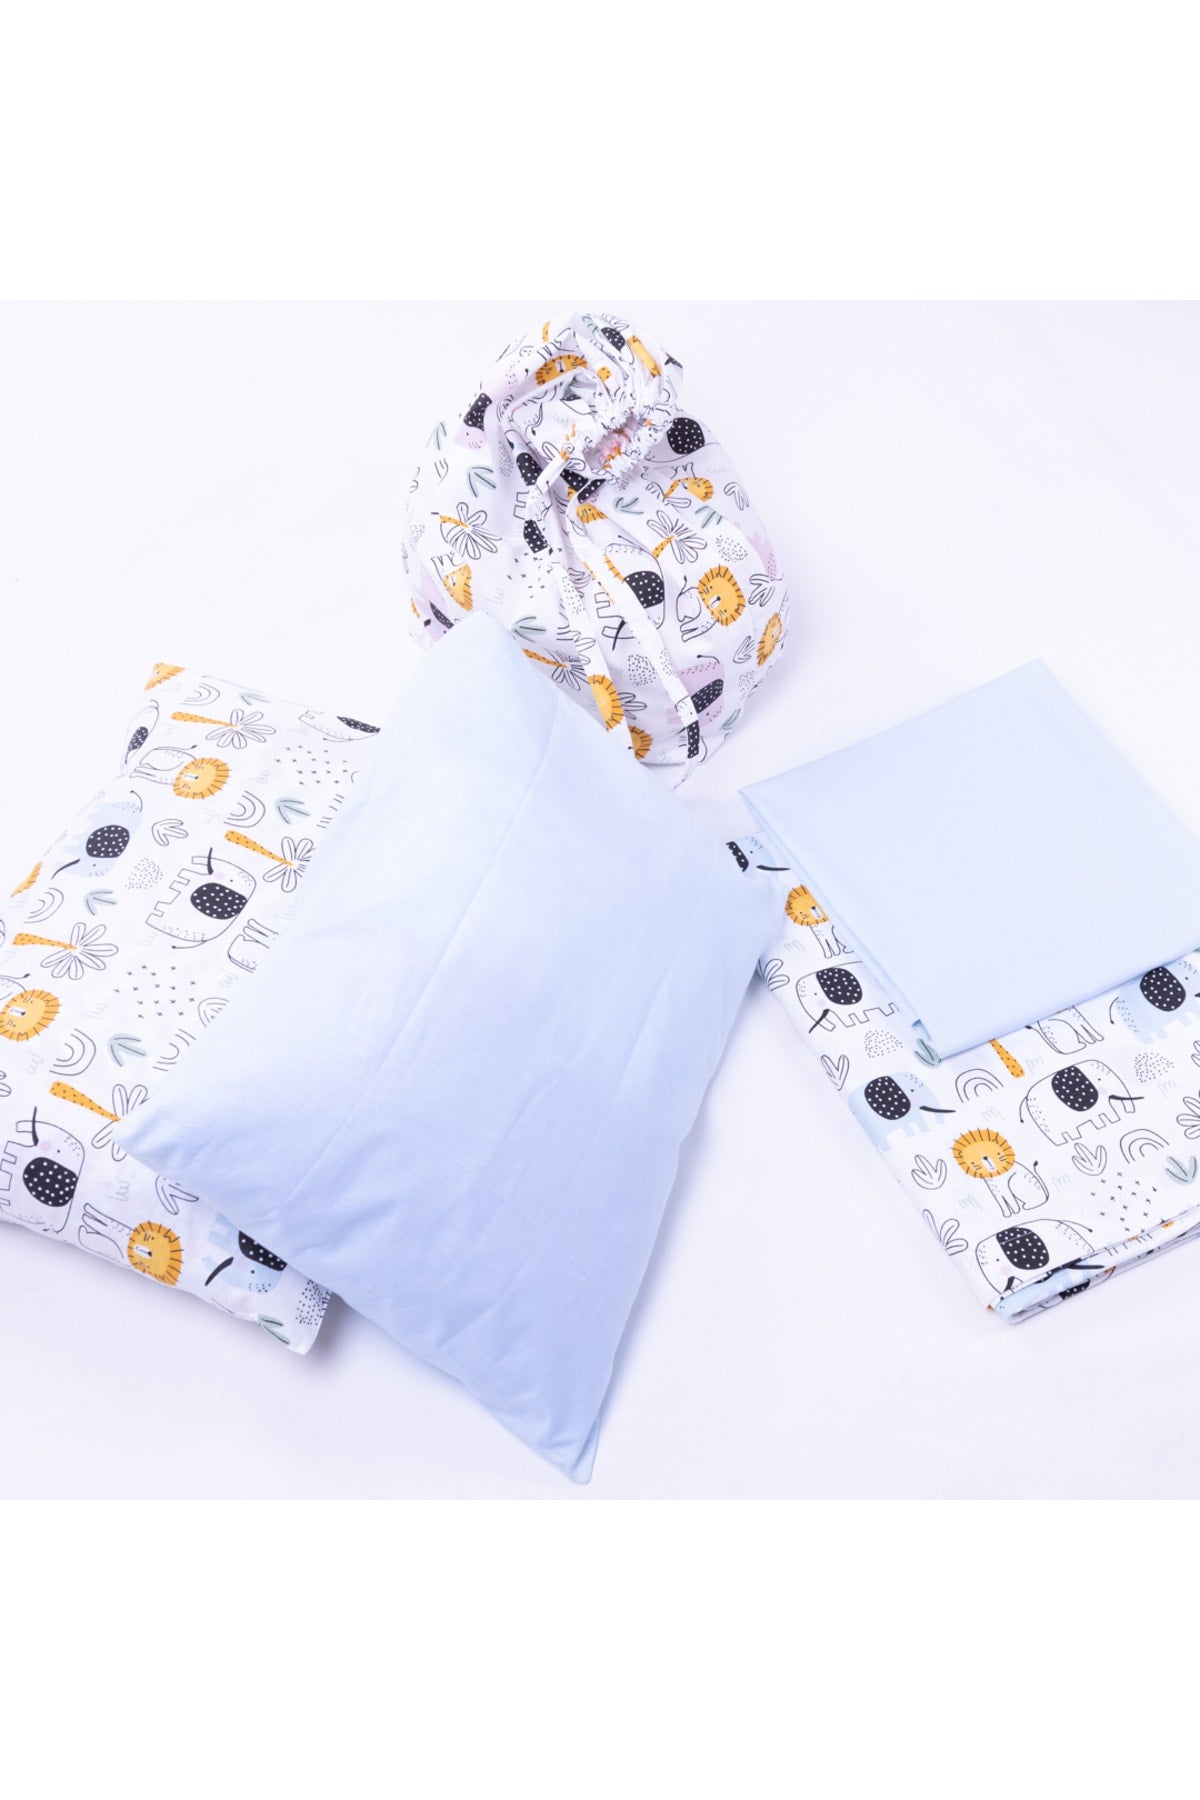 Organic cotton 5-piece baby bedding set (2 pillowcases, 1 duvet cover, 1 bed sheet, 1 soiled towel